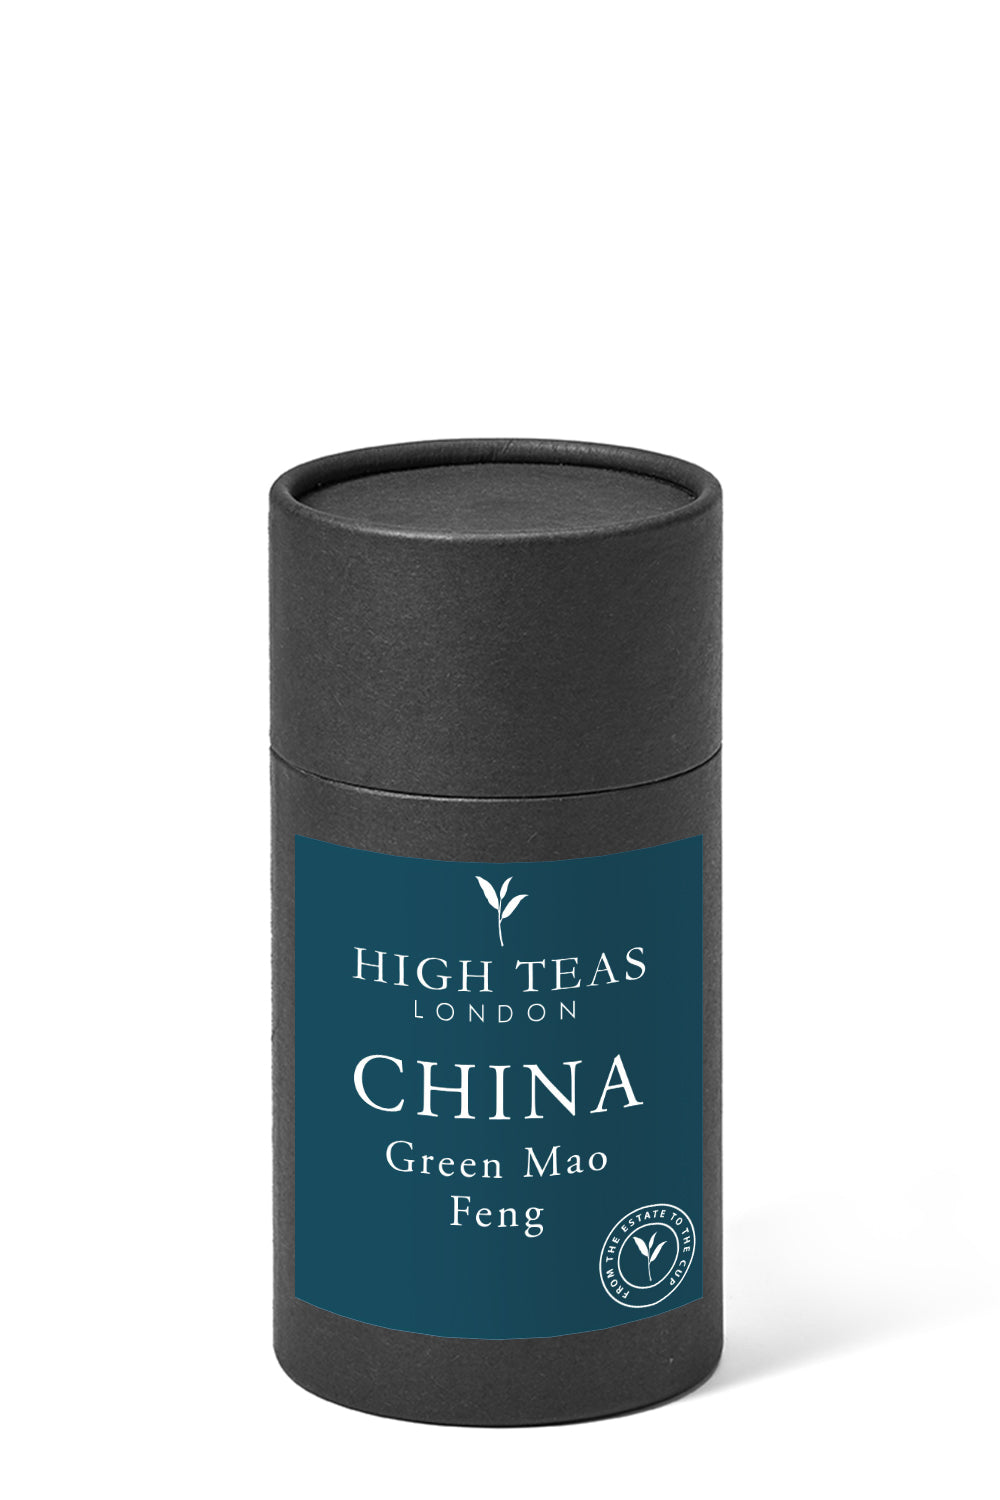 Green Mao Feng "Long March"-60g gift-Loose Leaf Tea-High Teas